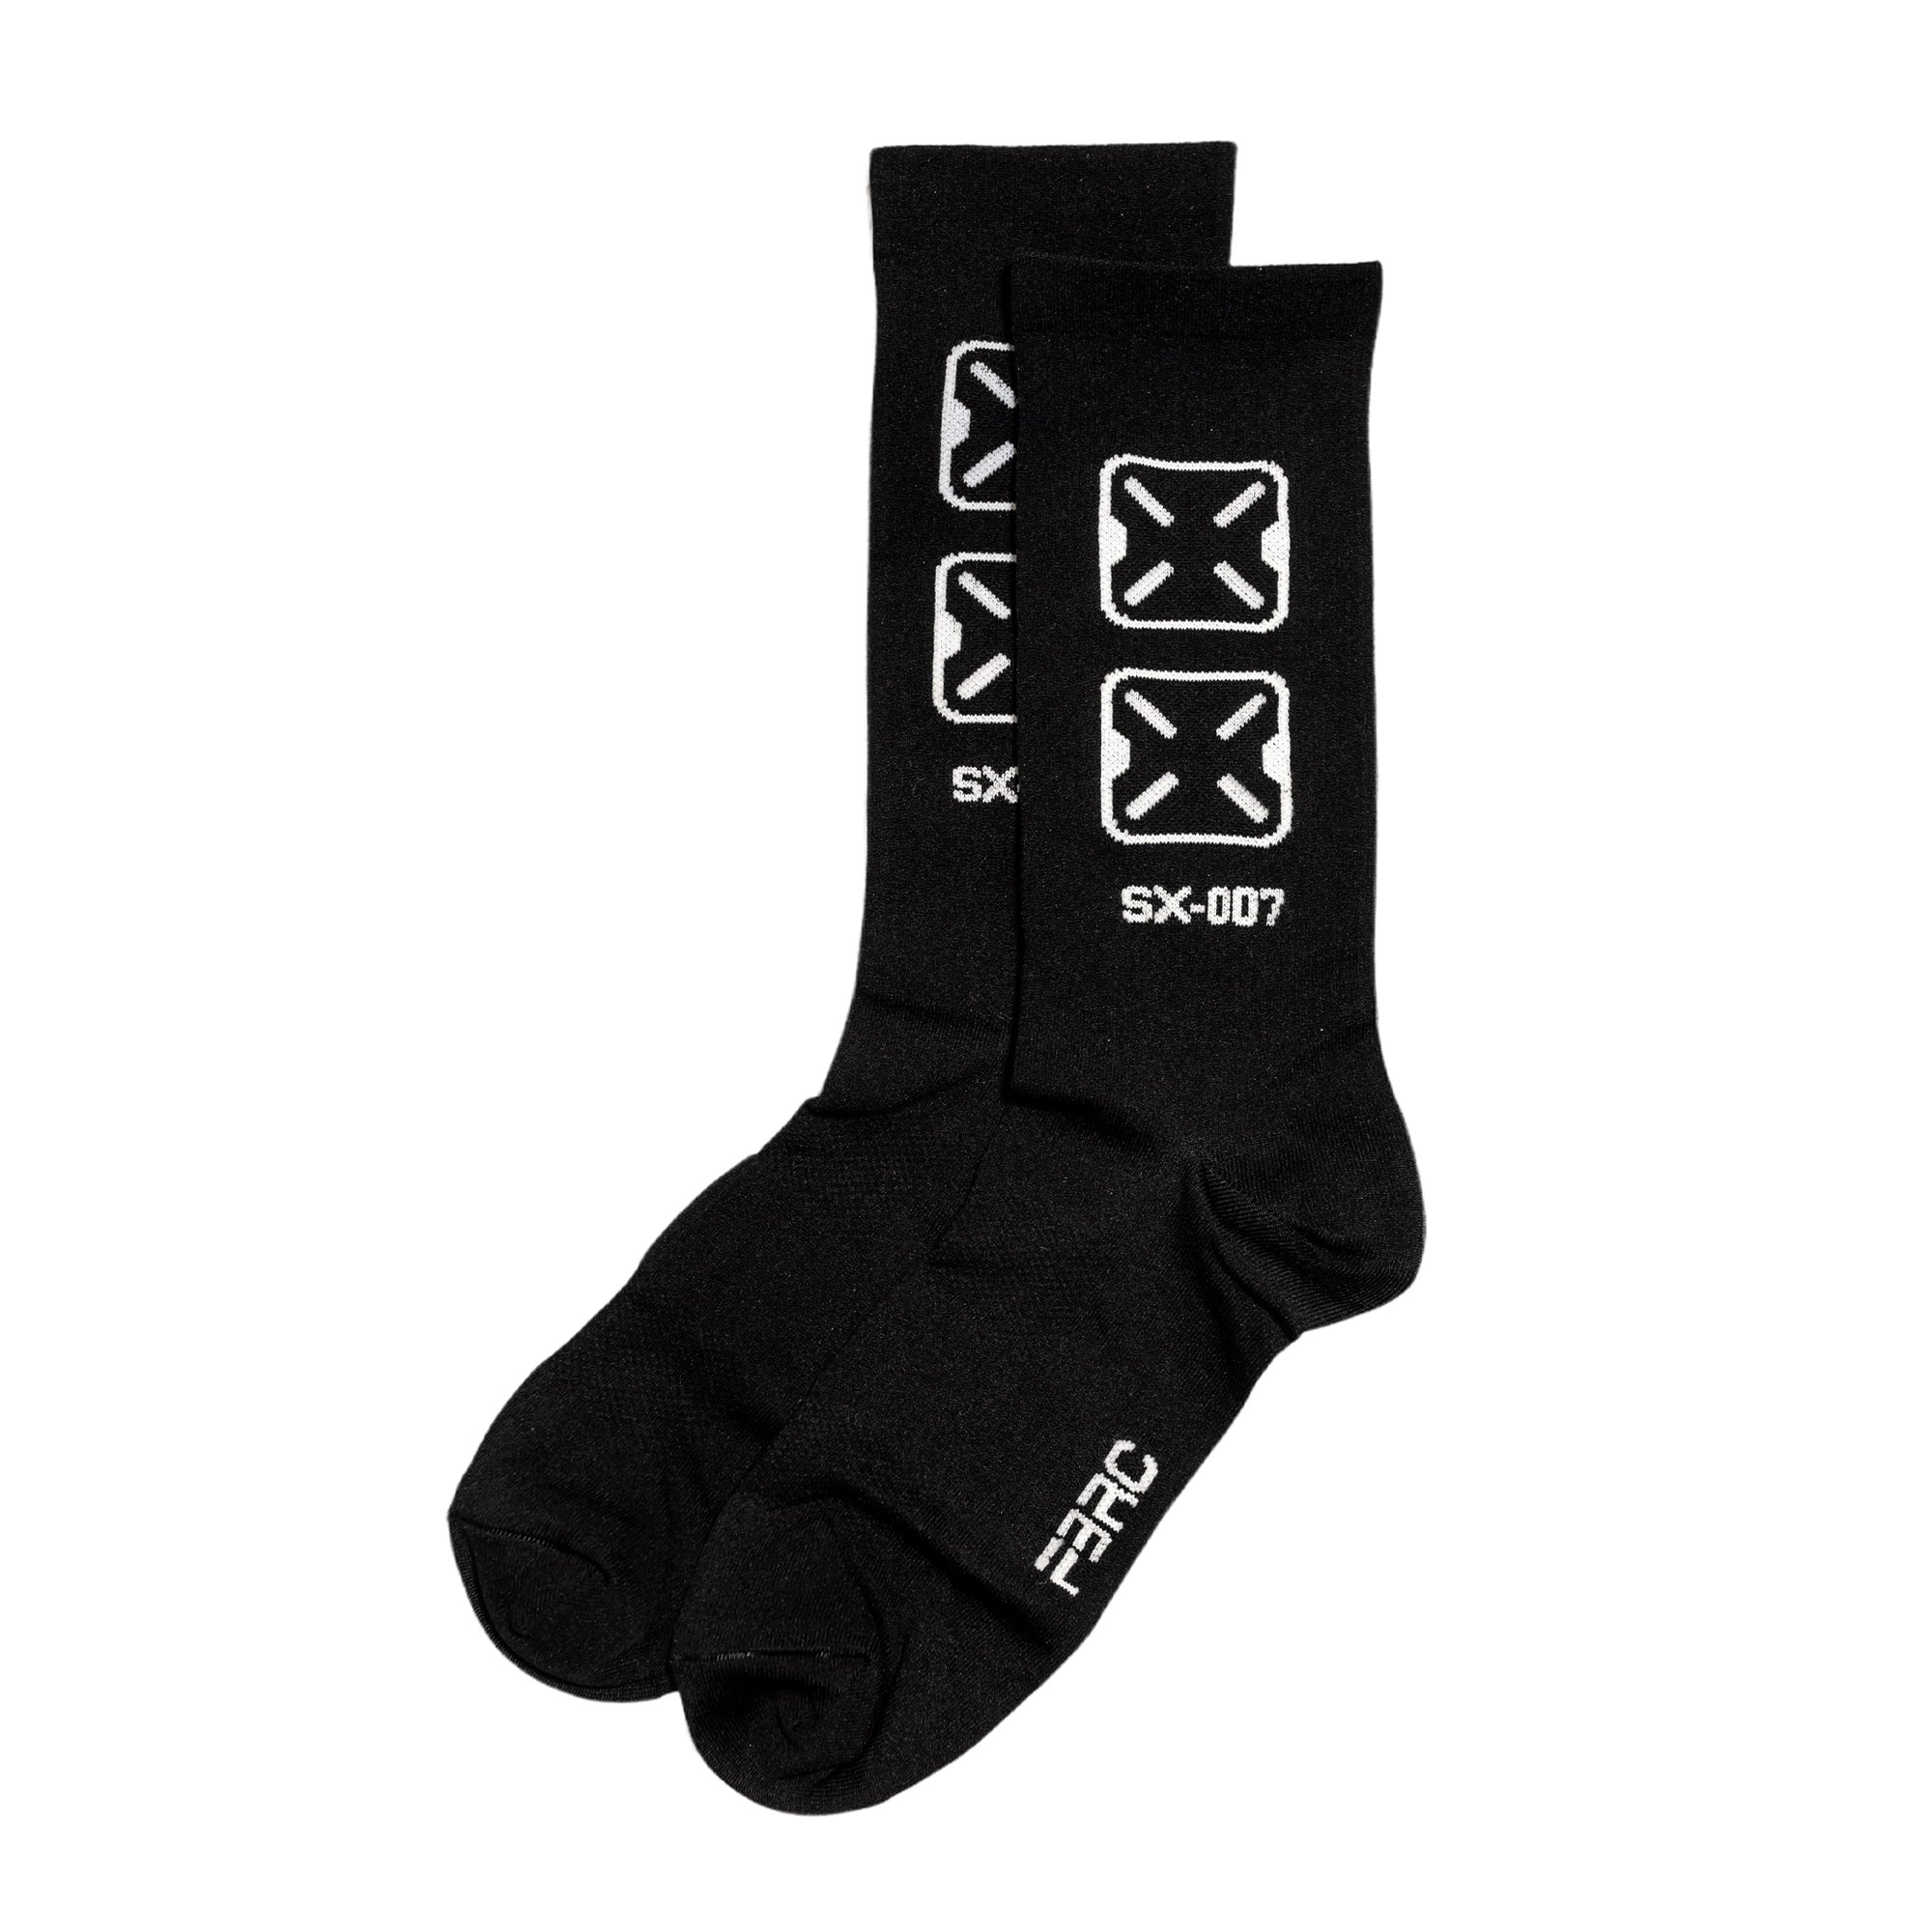 SX-007 Black Crew Socks